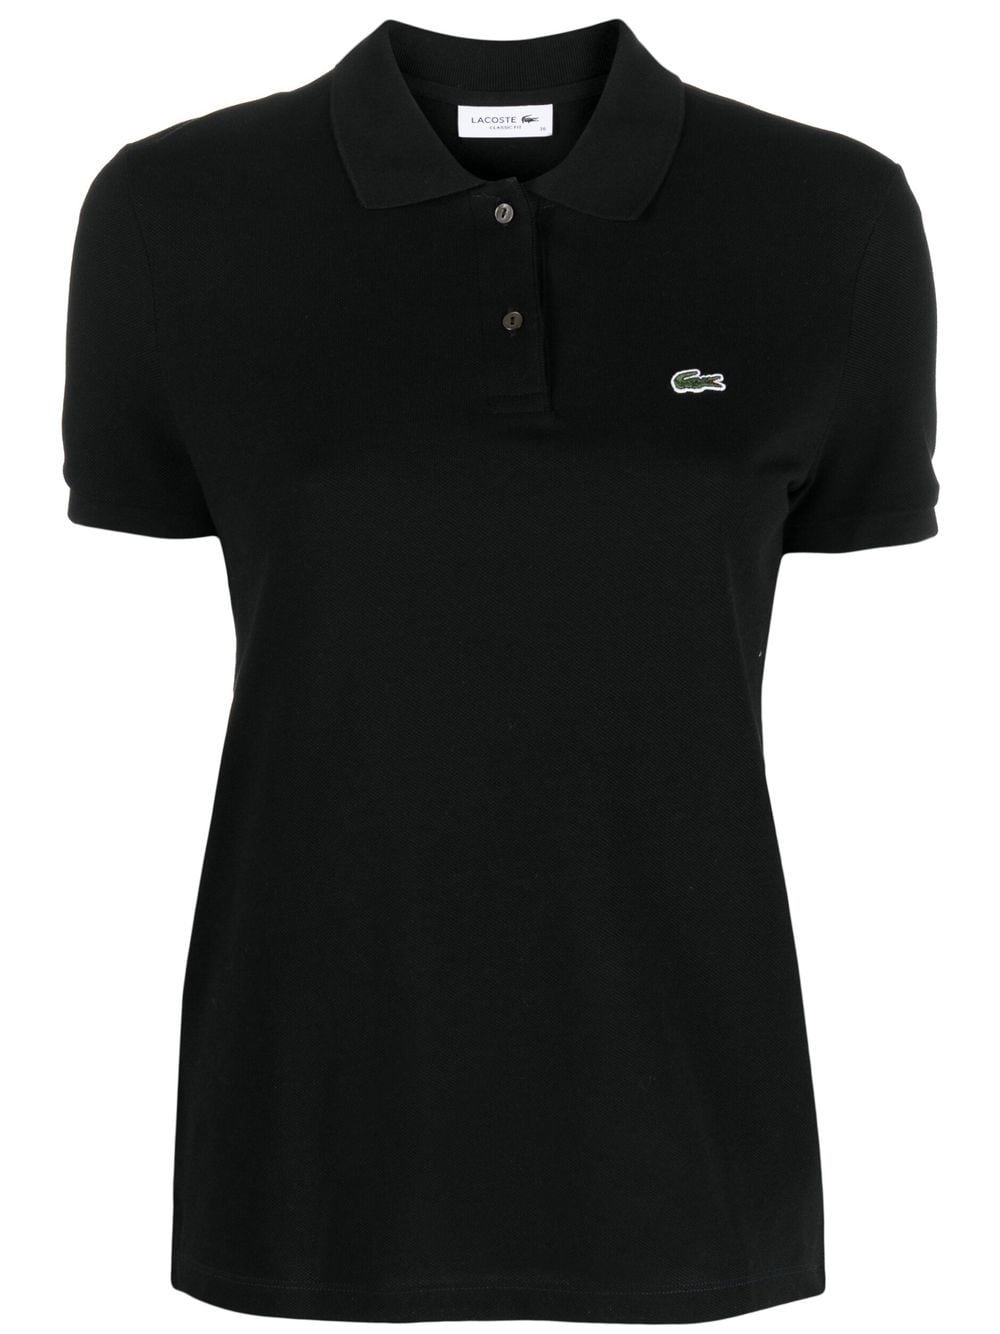 Lacoste short sleeve polo shirt - Black von Lacoste